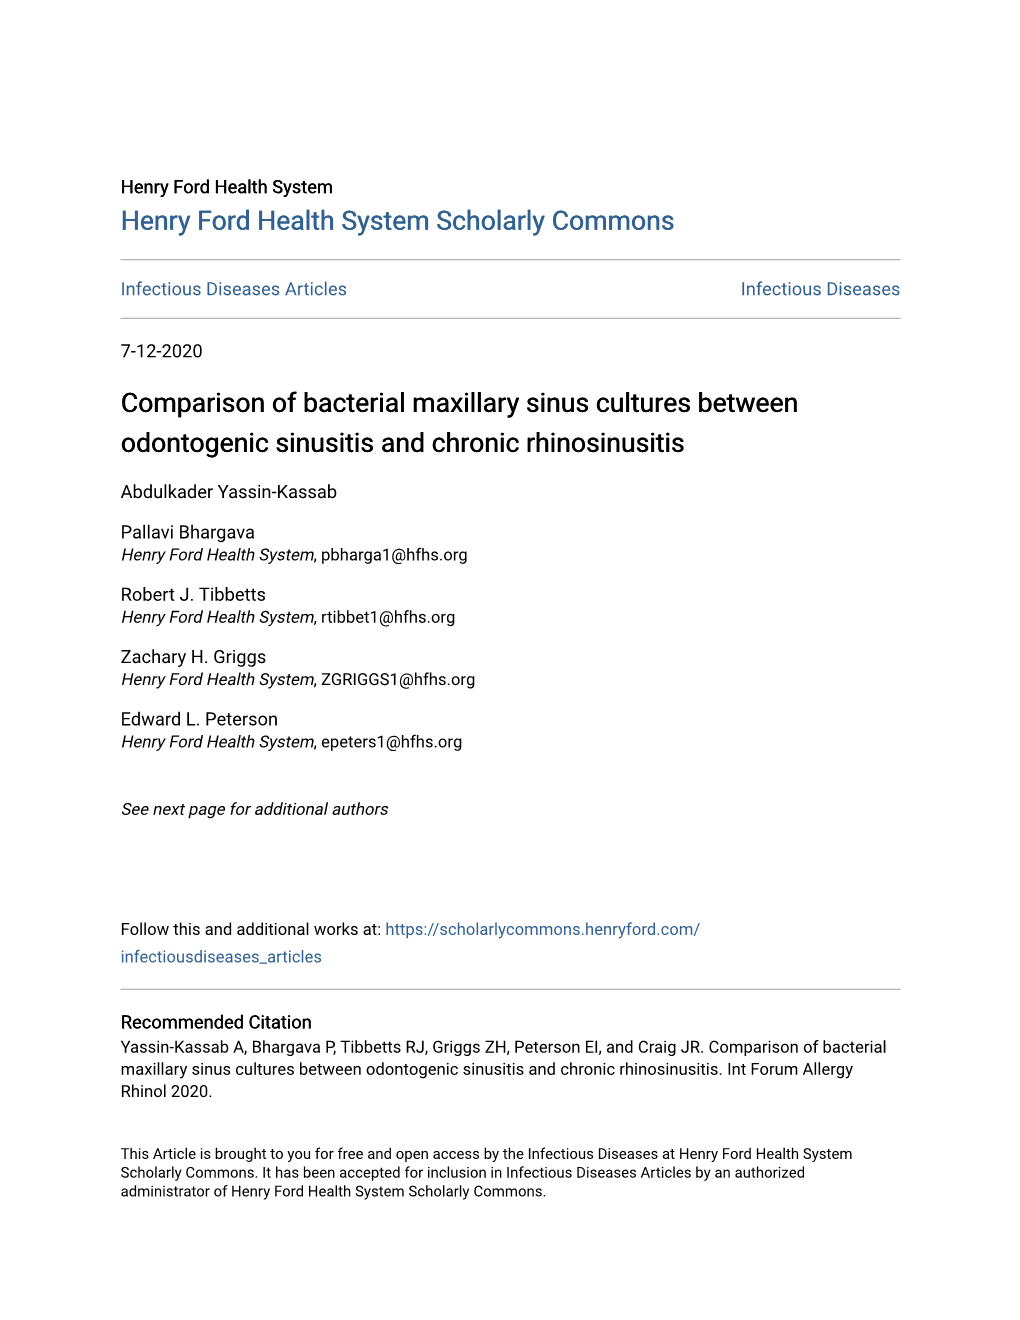 Comparison of Bacterial Maxillary Sinus Cultures Between Odontogenic Sinusitis and Chronic Rhinosinusitis